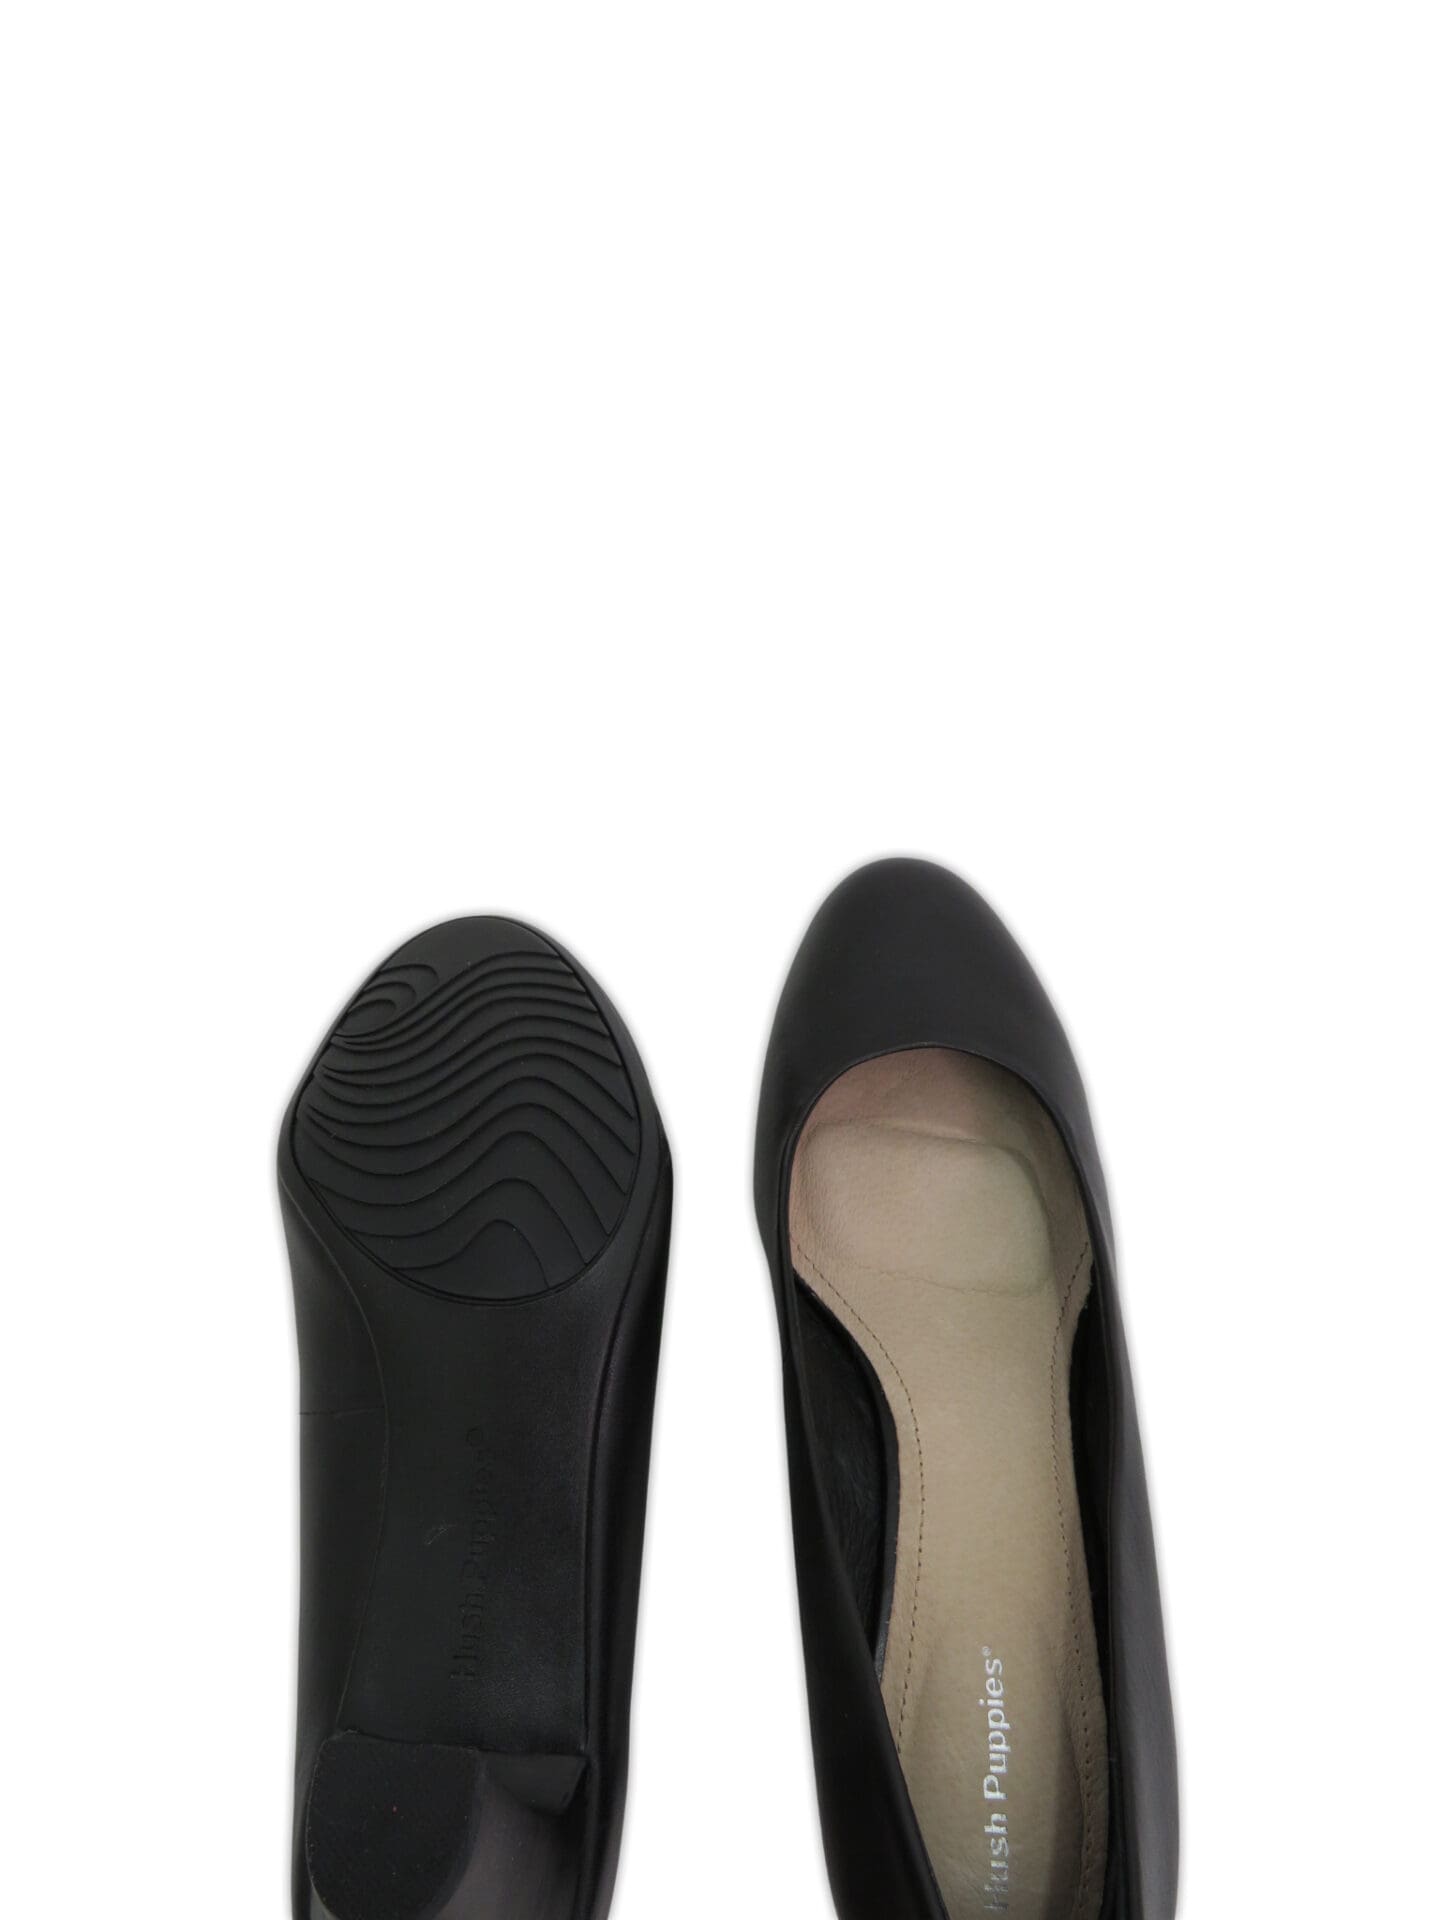 Black leather low heels closed toe